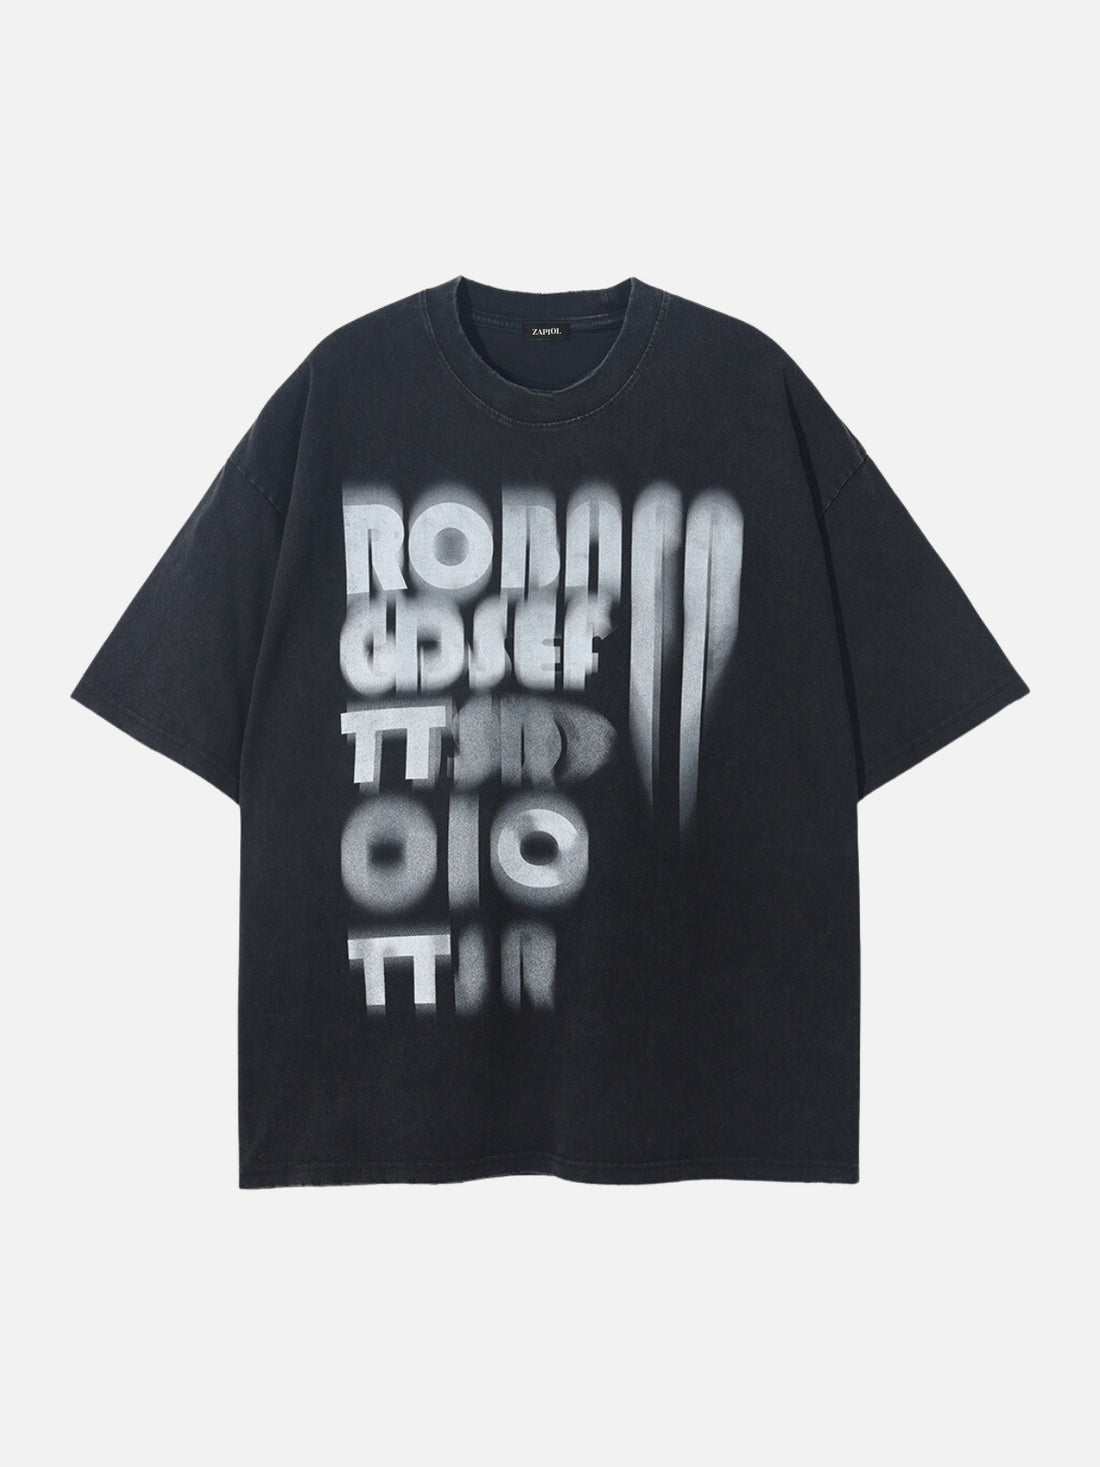 ROBAP - Oversized Print T-Shirt Black | Teenwear.eu